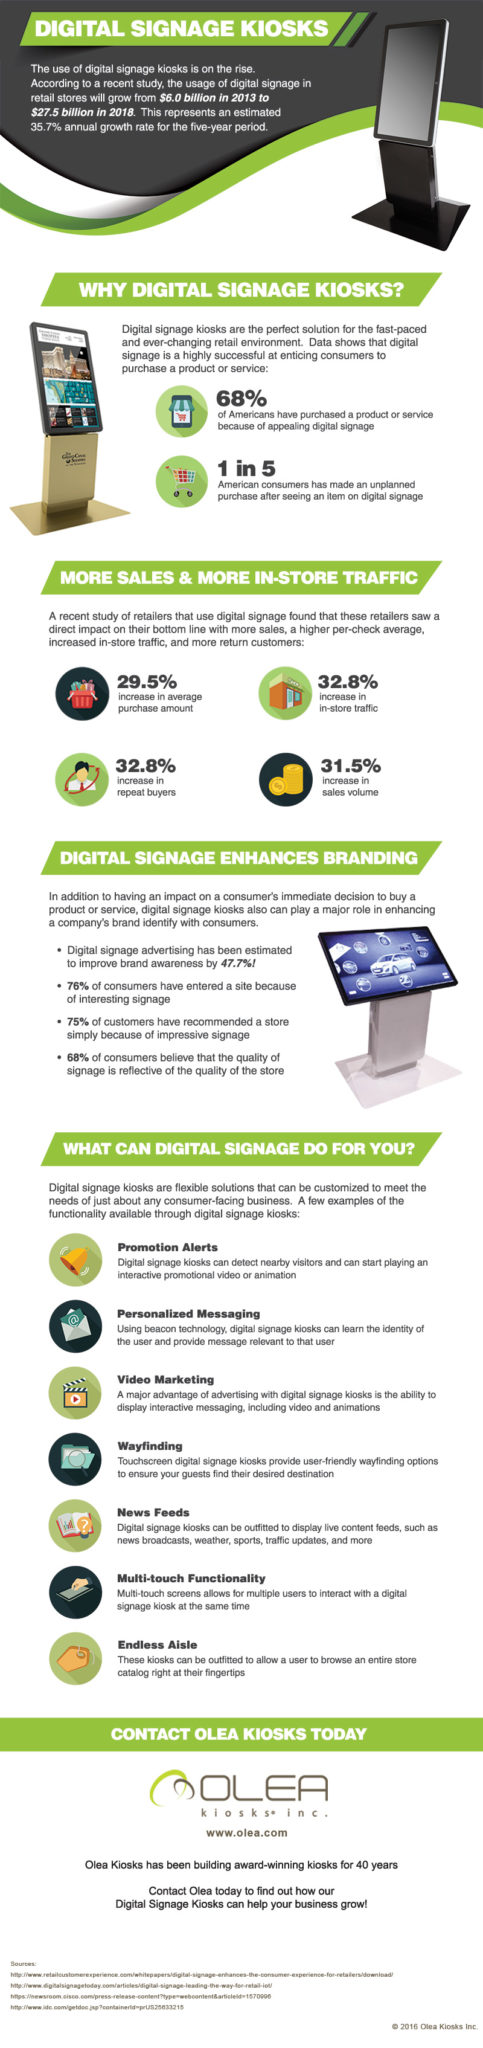 Digital Signage Kiosks - Infographic